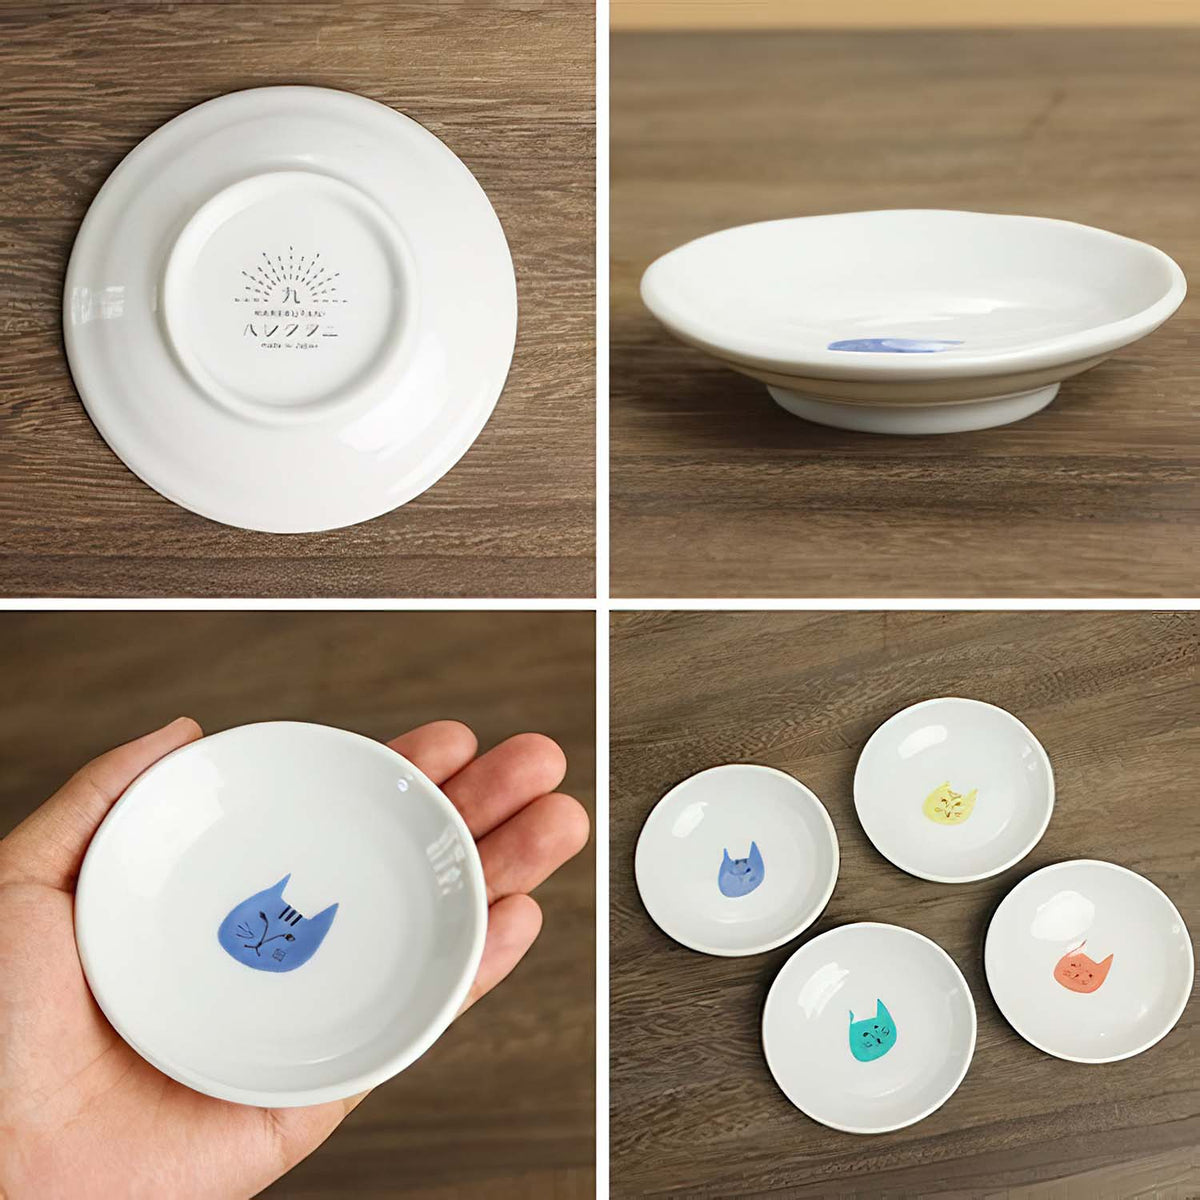 HAREKUTANI Porcelain Cat Small Plate Set (4 Plates)